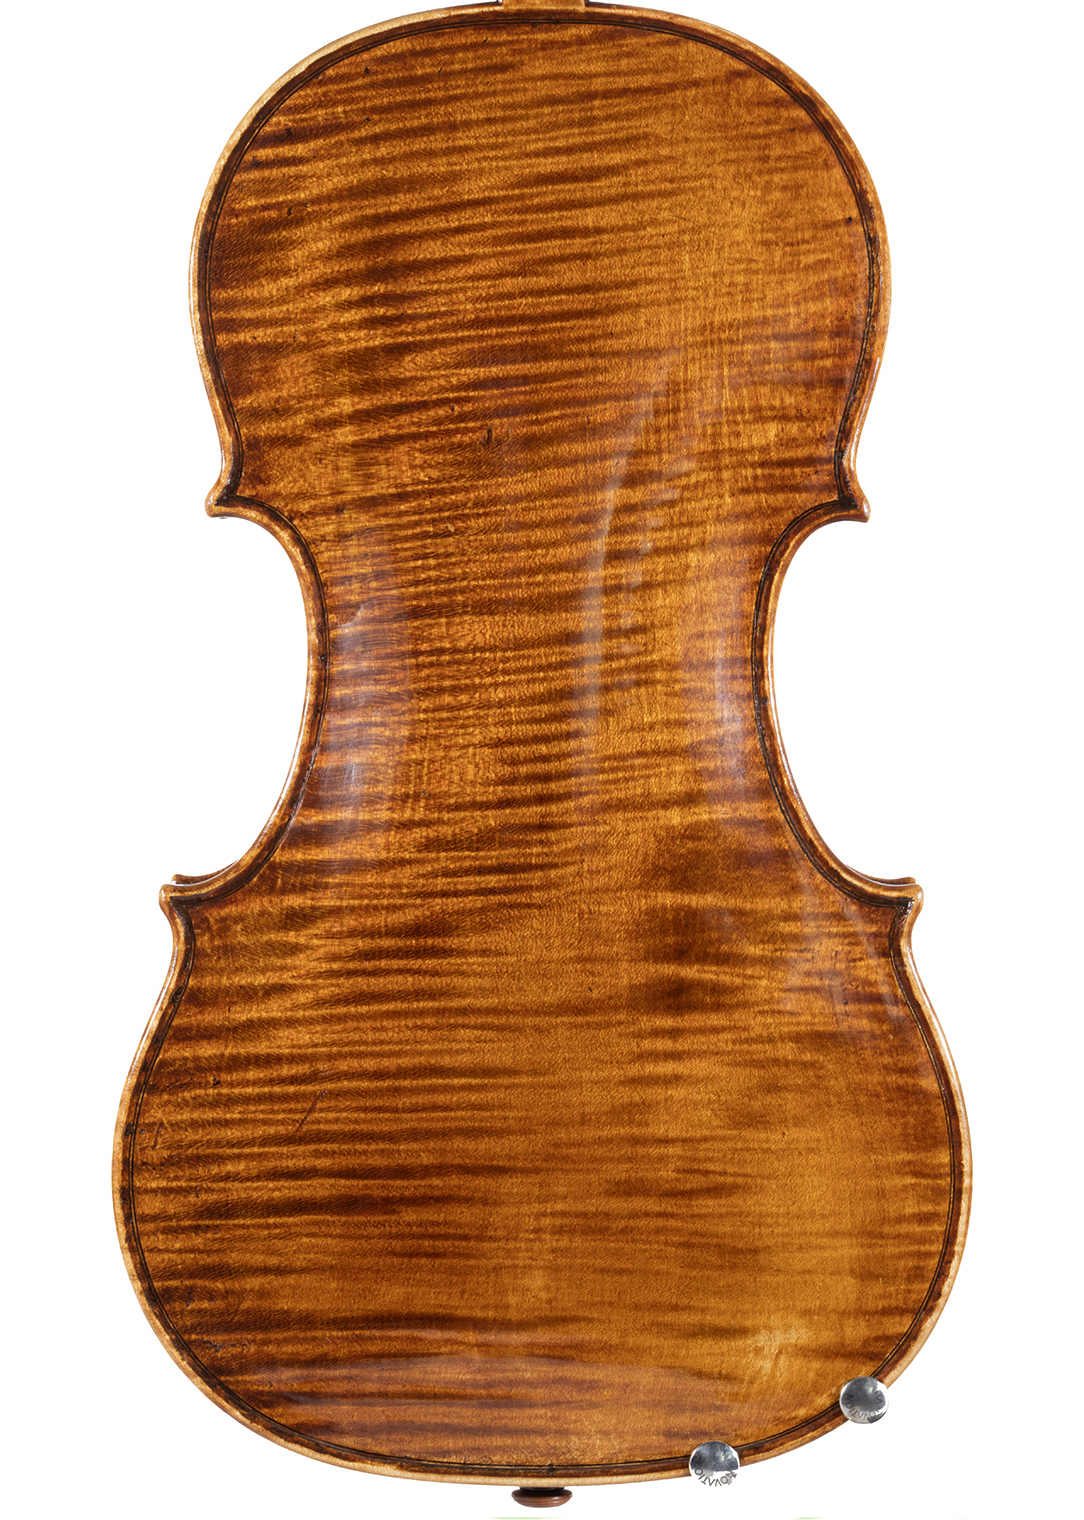 2003 Borman Violin available